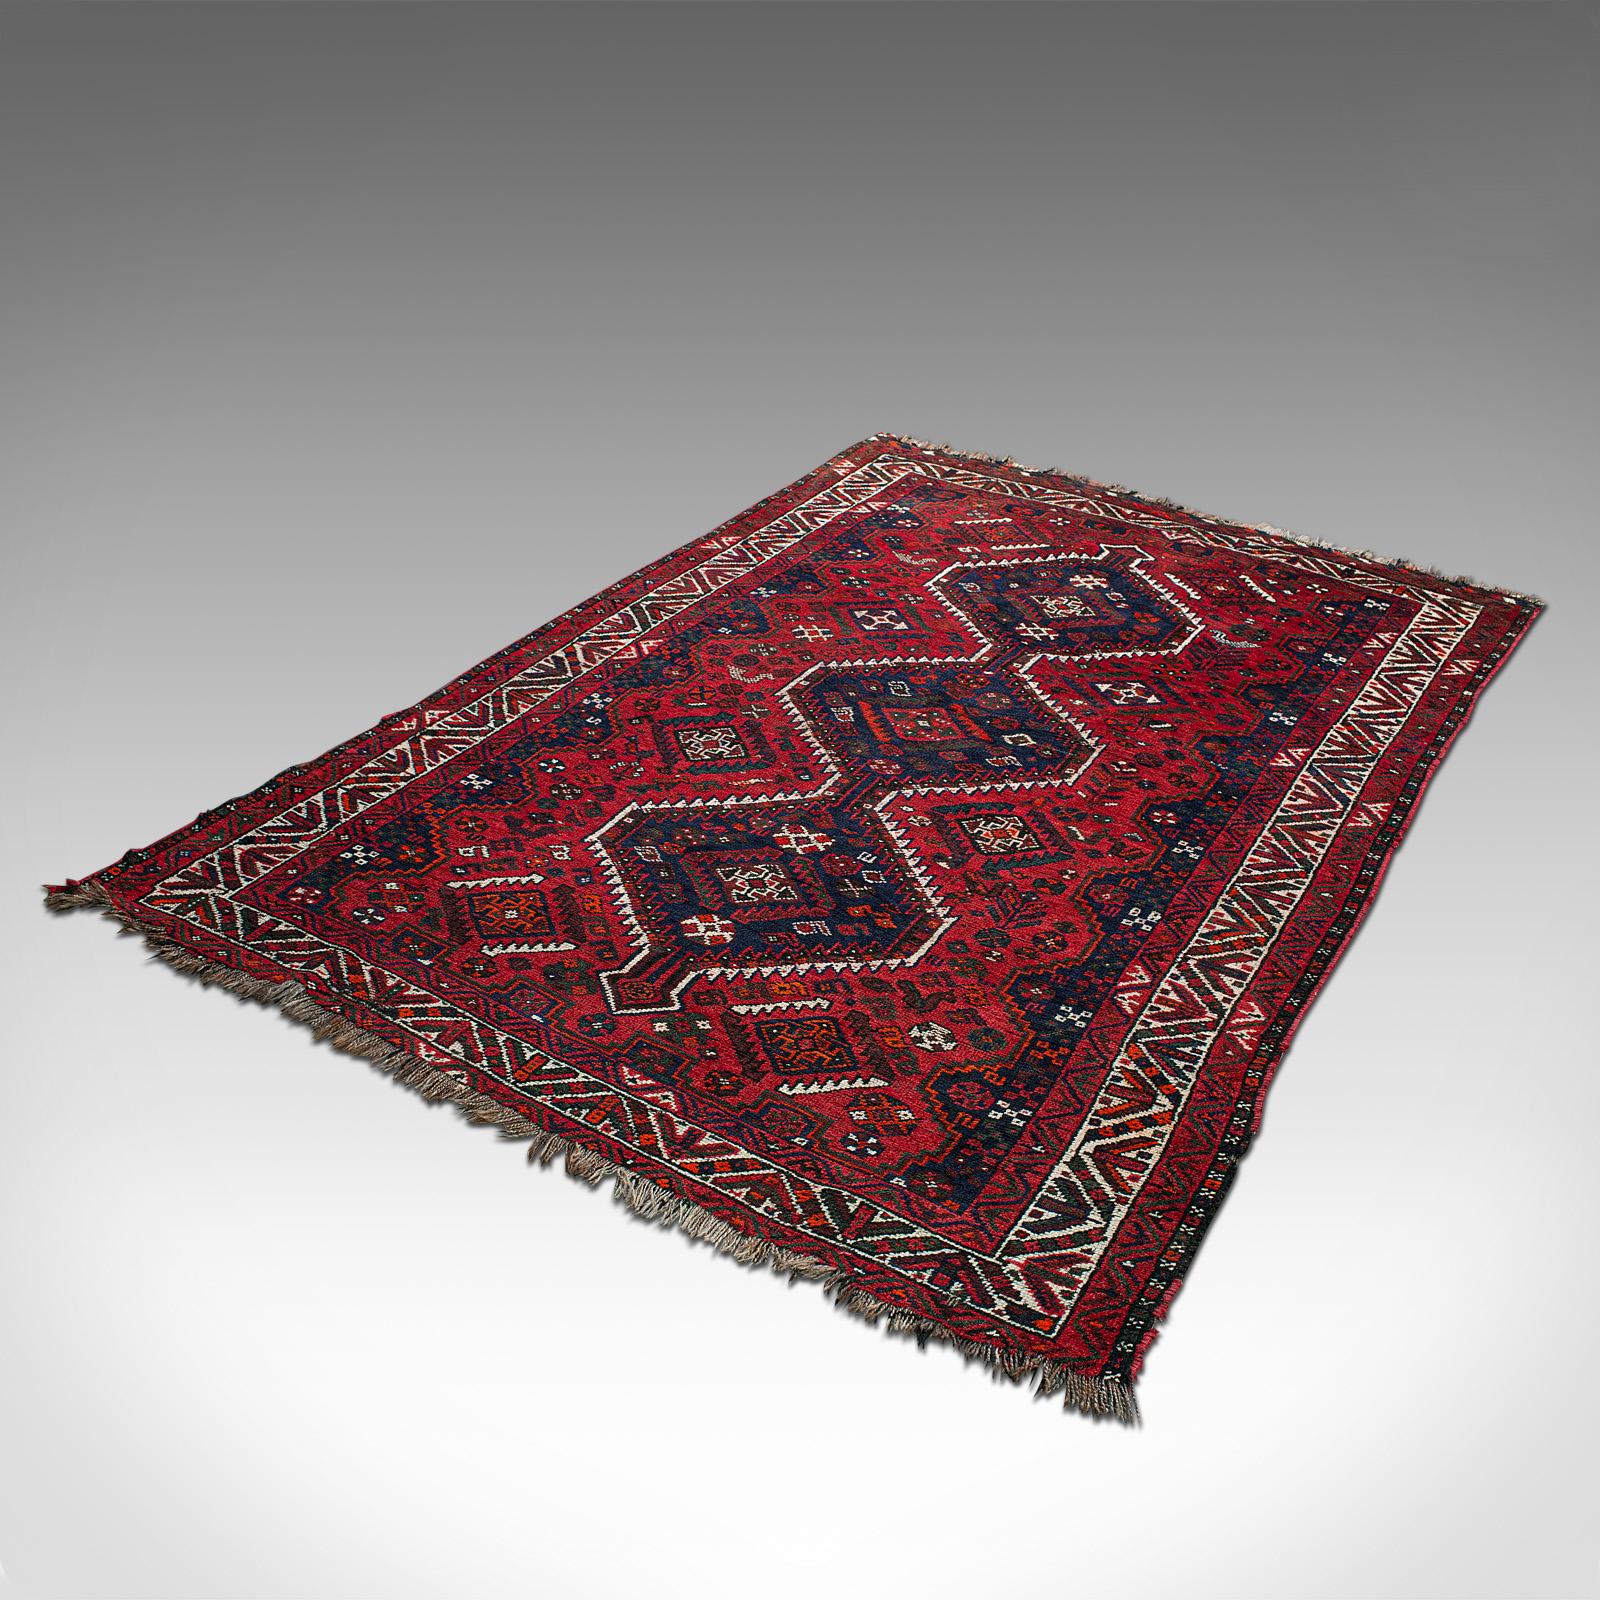 Unknown Antique Turkoman Carpet, Caucasian, Hand Woven, Lounge, Hallway, Rug, Circa 1900 For Sale